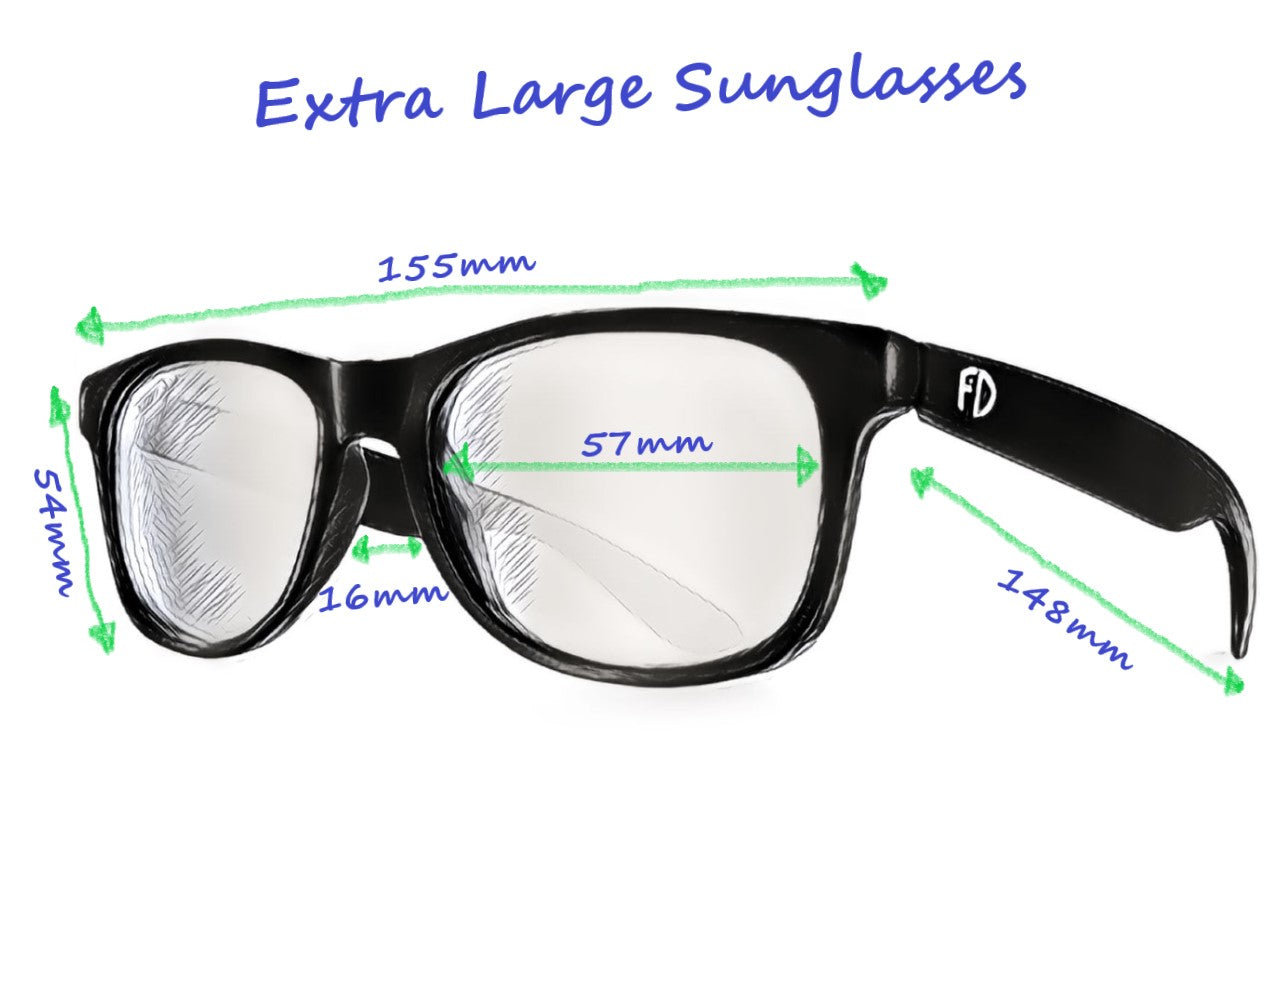 XL Prescription Glasses/Sunglasses for Big Heads